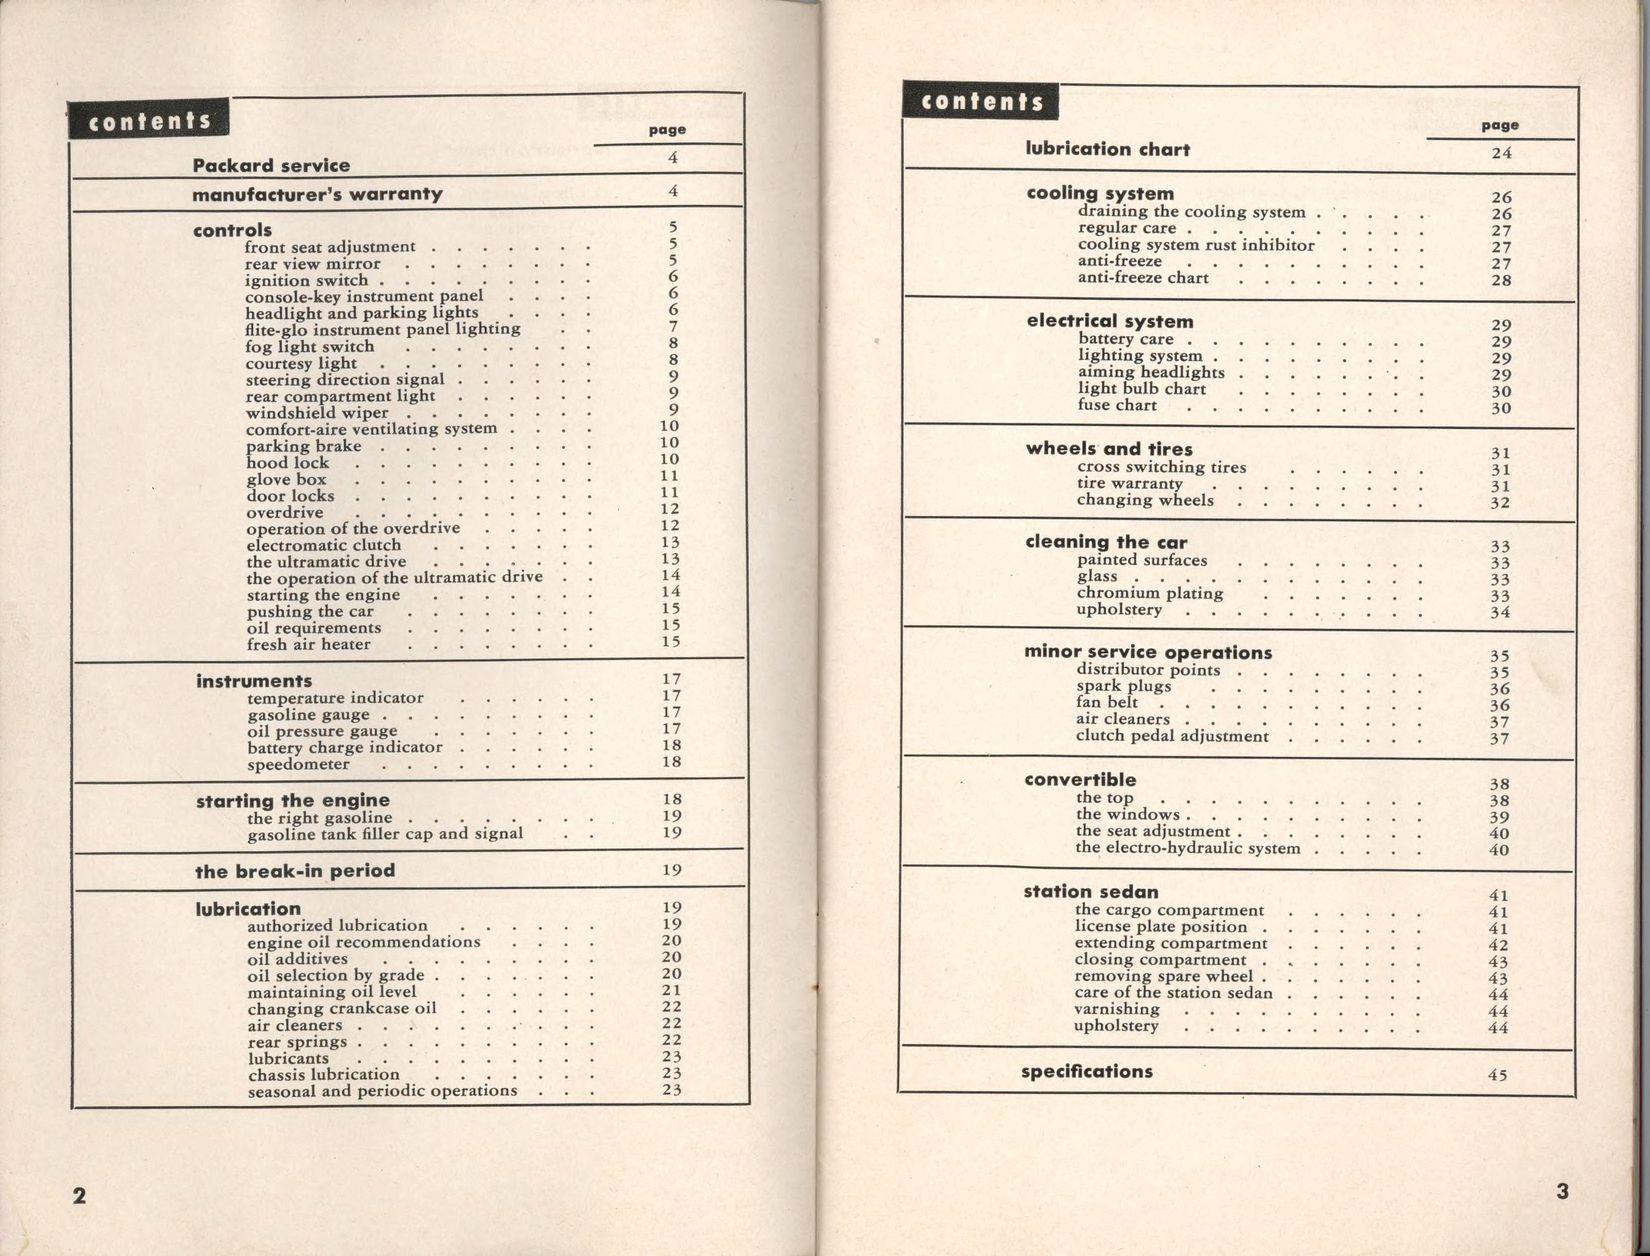 1949 Packard Manual-02-03